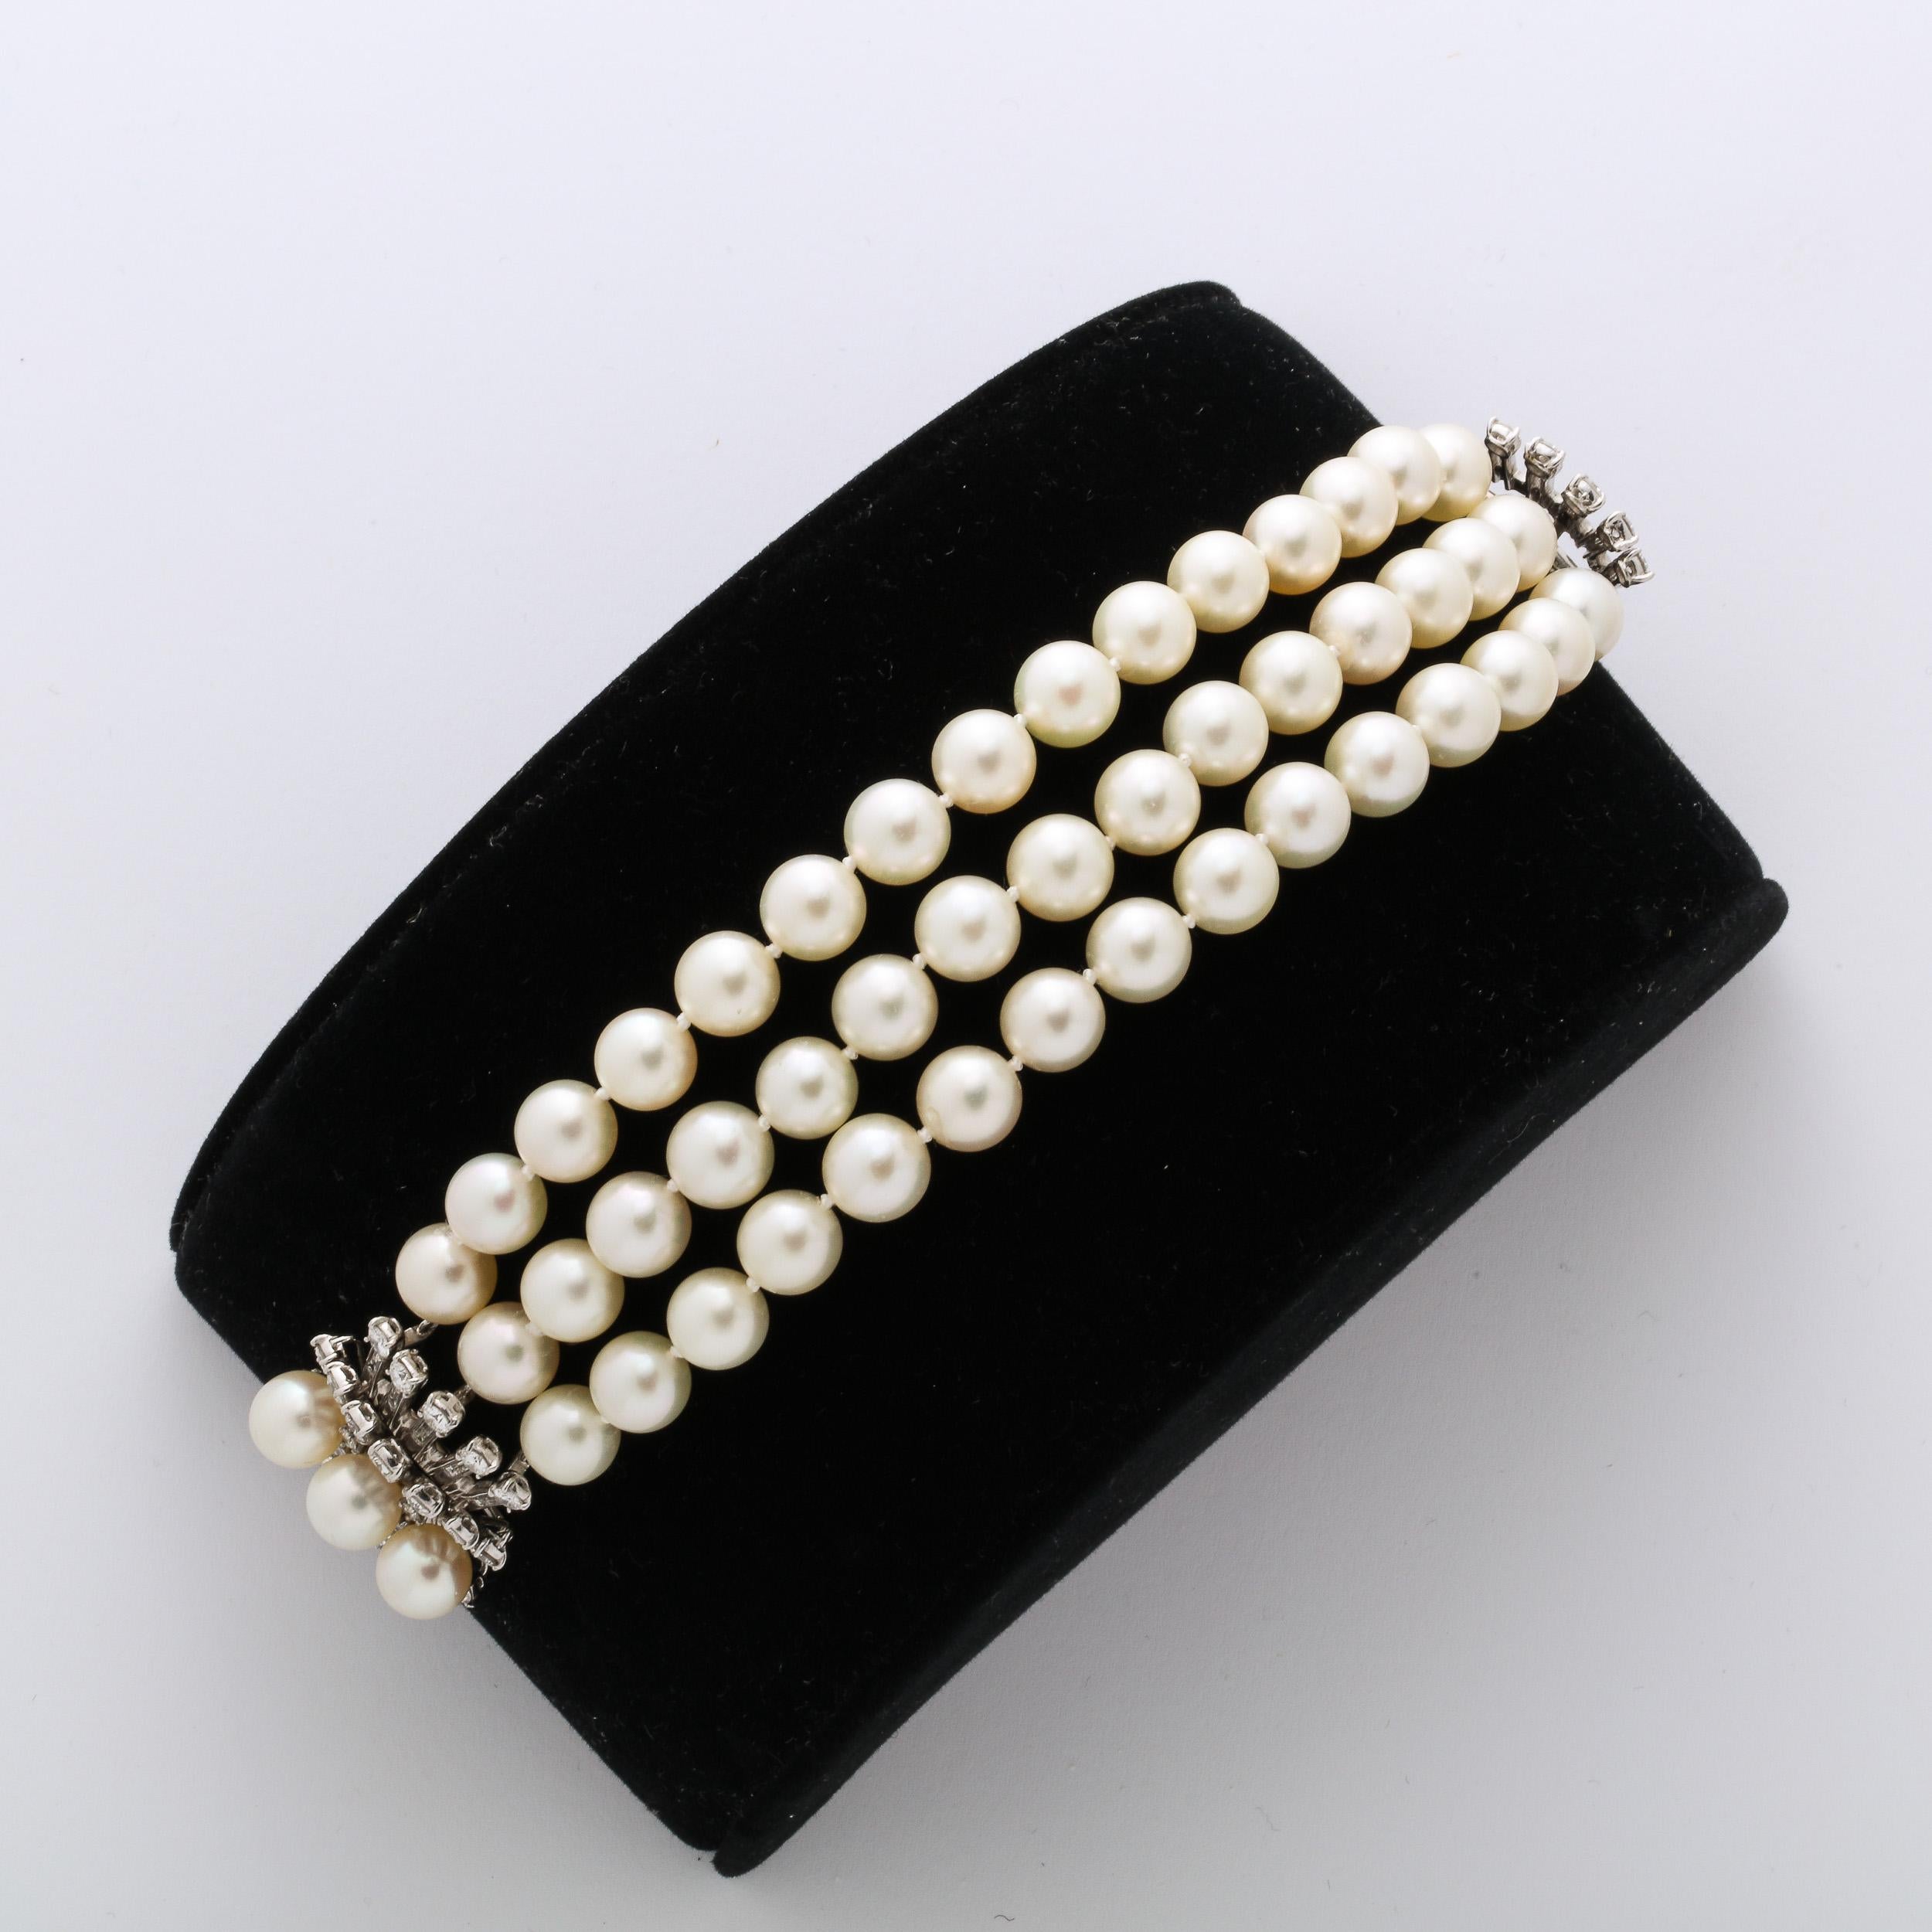 Baguette Cut Marianne Ostier Triple Strand Cultured Pearls Bracelet w/ 5 Karat Diamond Clasp